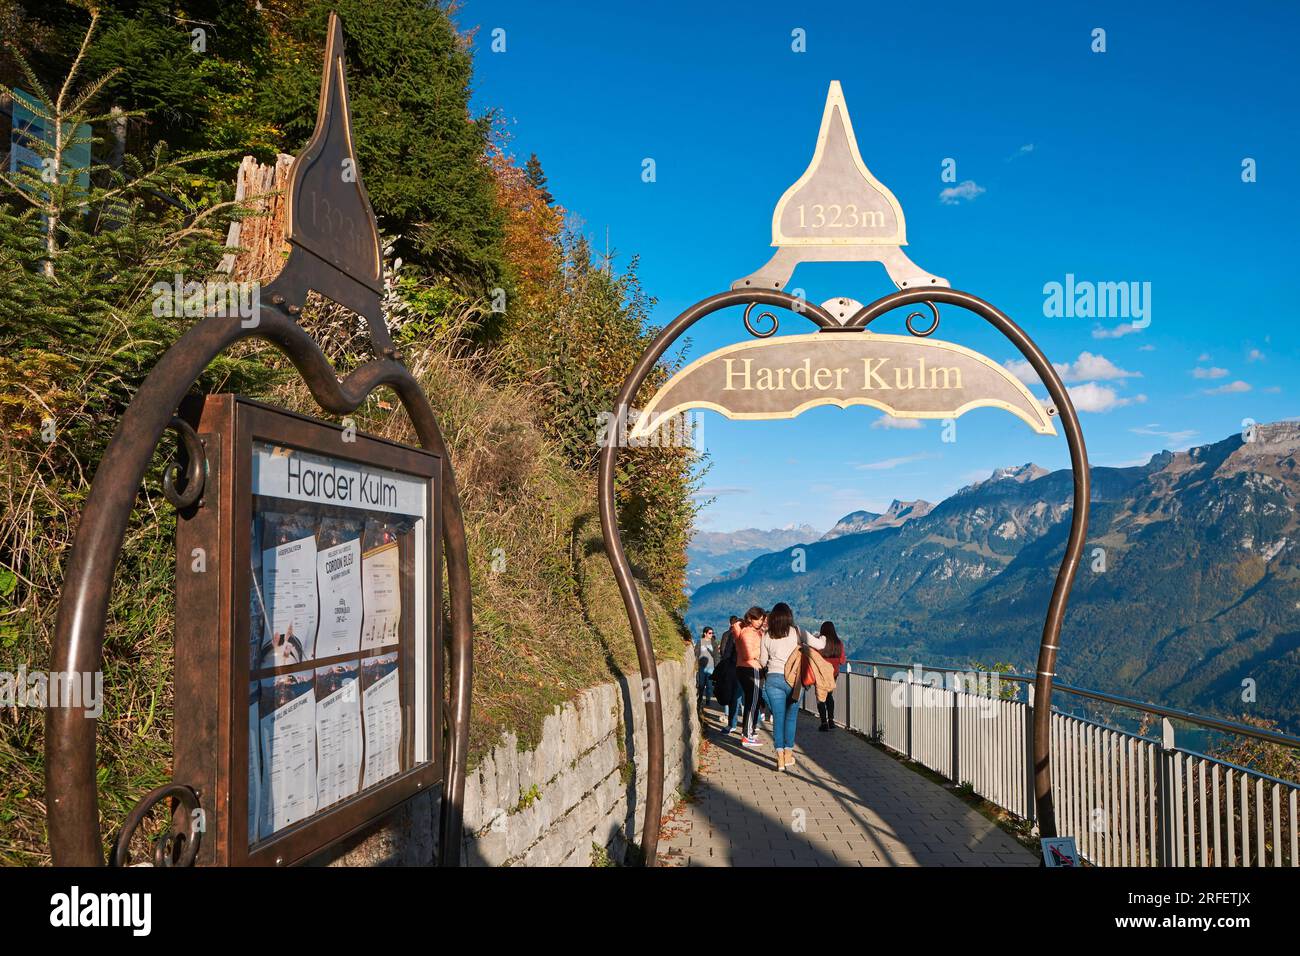 Svizzera, Cantone di Berna, Interlaken, ingresso al ristorante Harder Kulm a 1323 m. Foto Stock